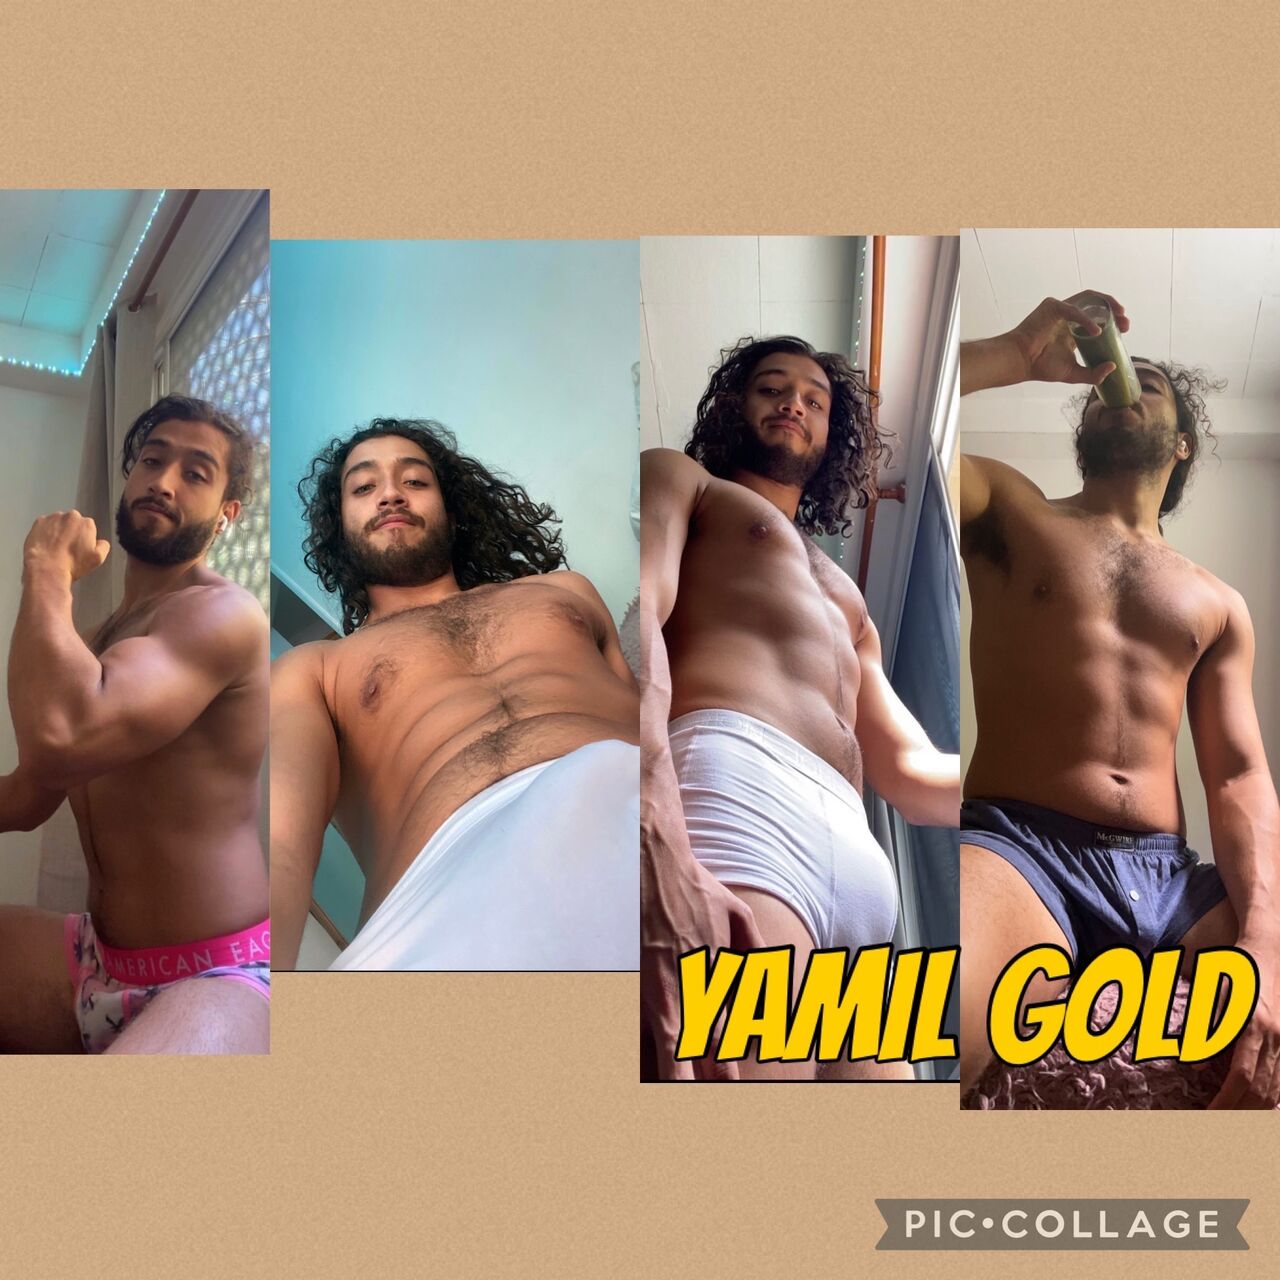 See Yamil Gold profile